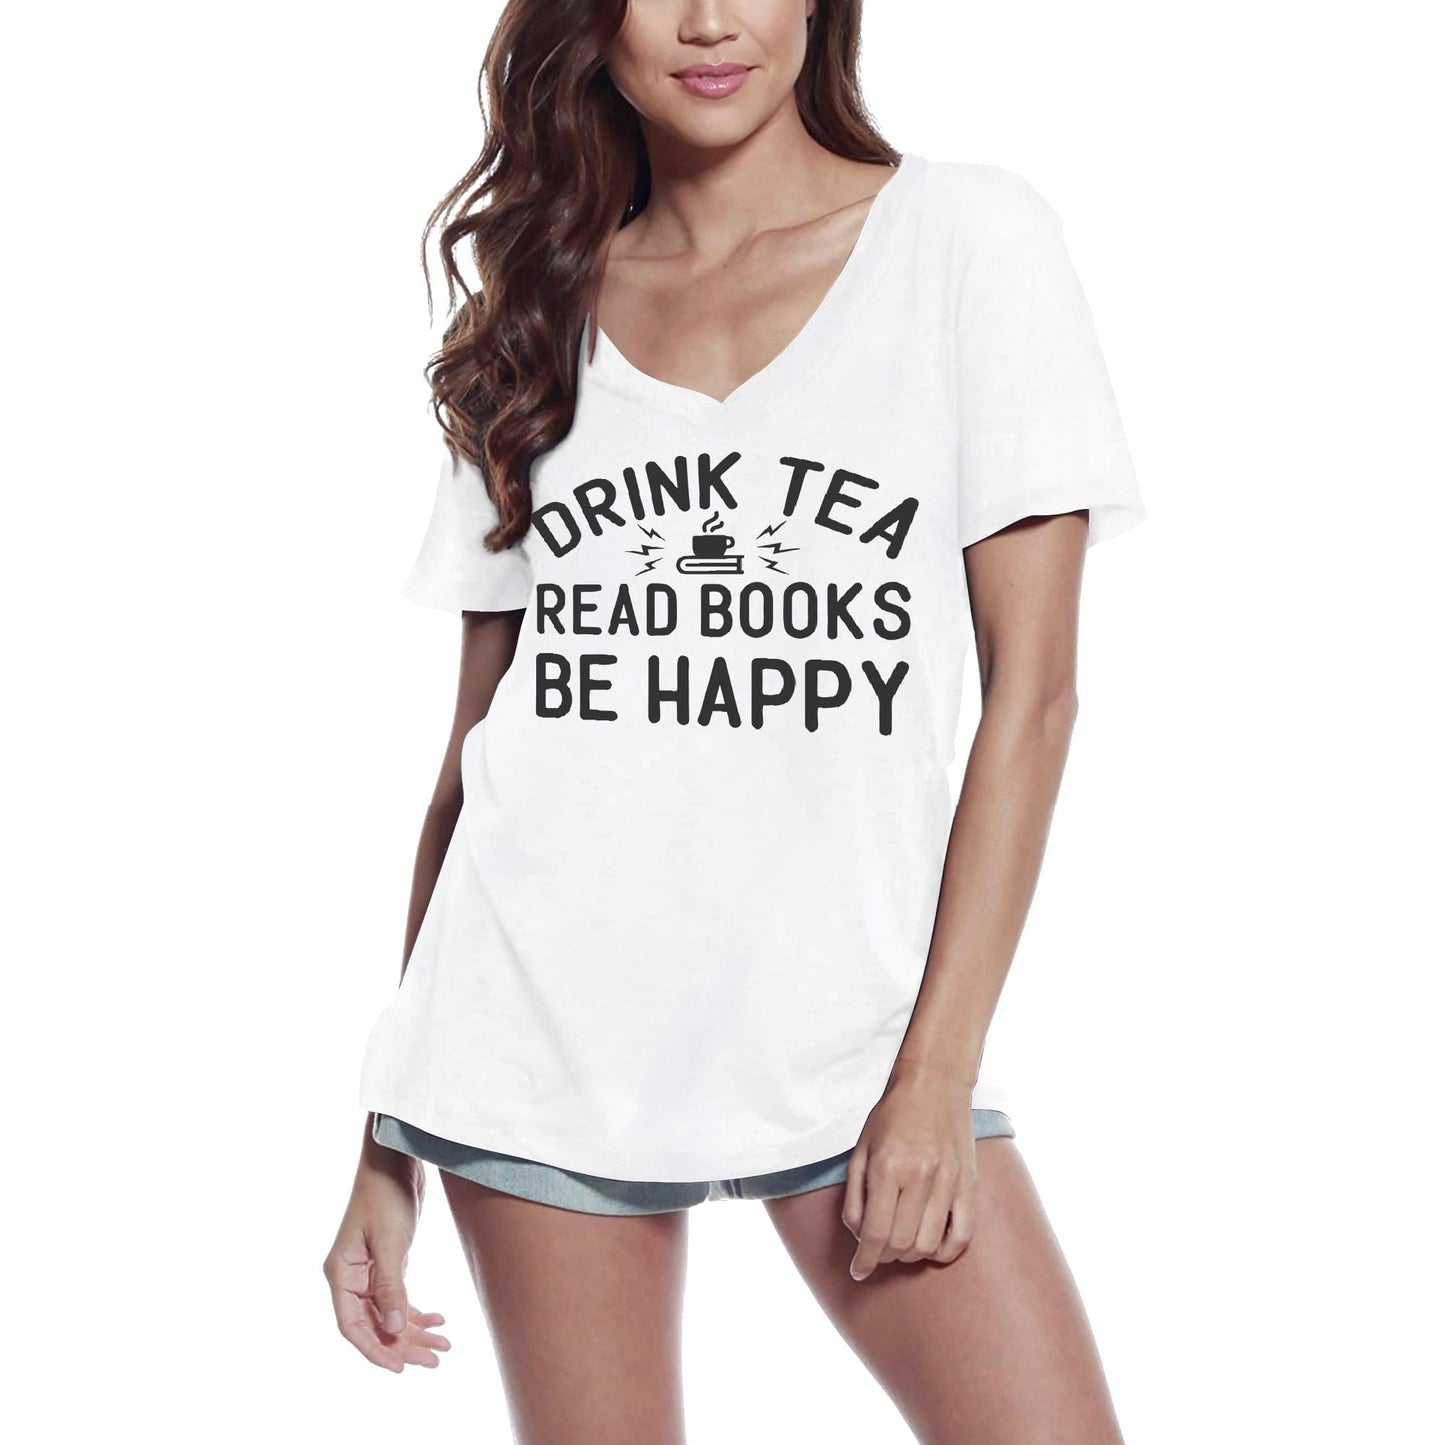 ULTRABASIC Women's T-Shirt Drink Tea Read Books be Happy - Short Sleeve Tee Shirt Tops